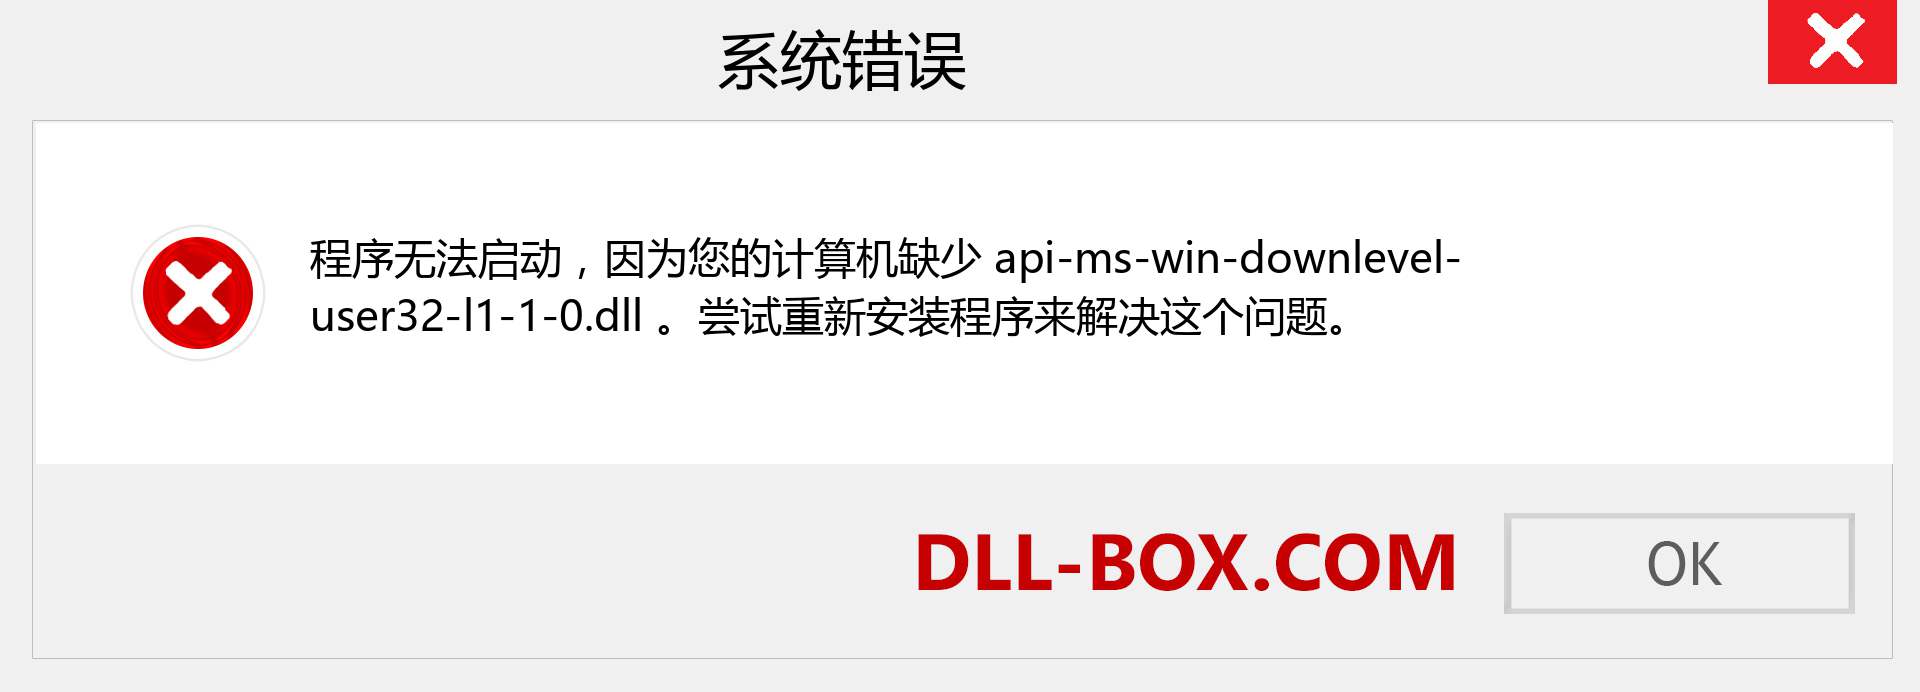 api-ms-win-downlevel-user32-l1-1-0.dll 文件丢失？。 适用于 Windows 7、8、10 的下载 - 修复 Windows、照片、图像上的 api-ms-win-downlevel-user32-l1-1-0 dll 丢失错误